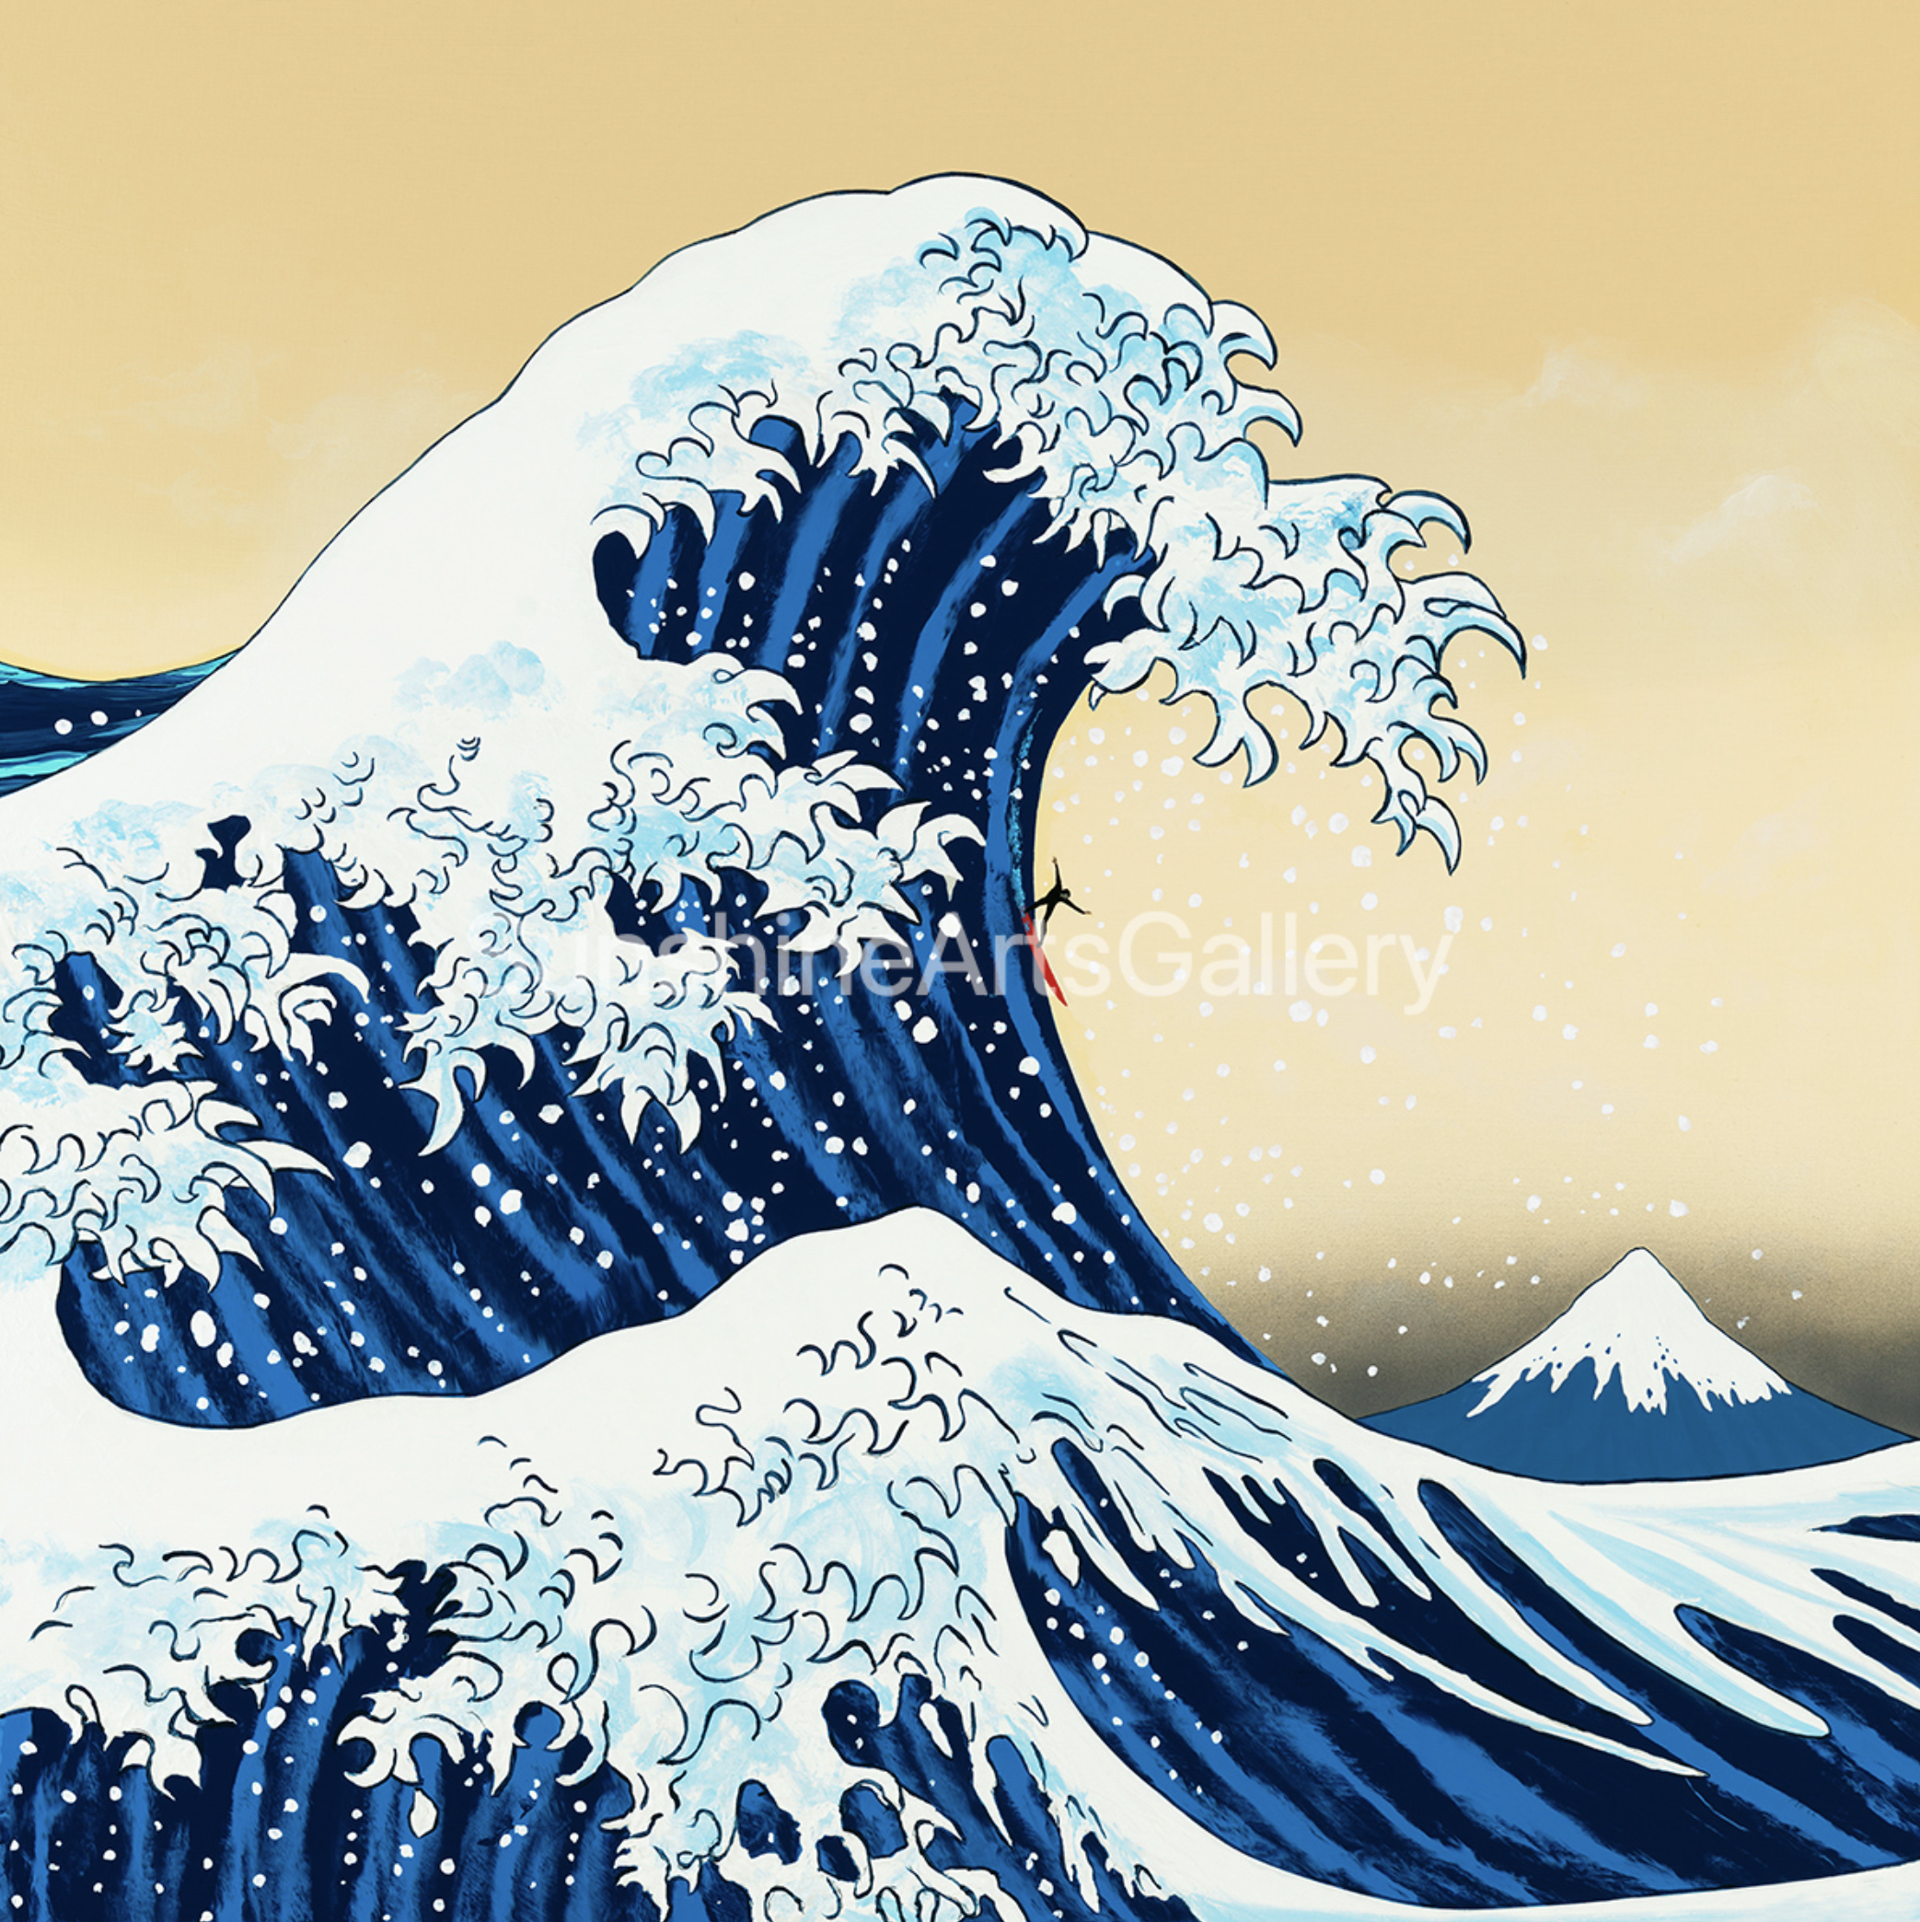 Japanese Wave by Thomas Deir